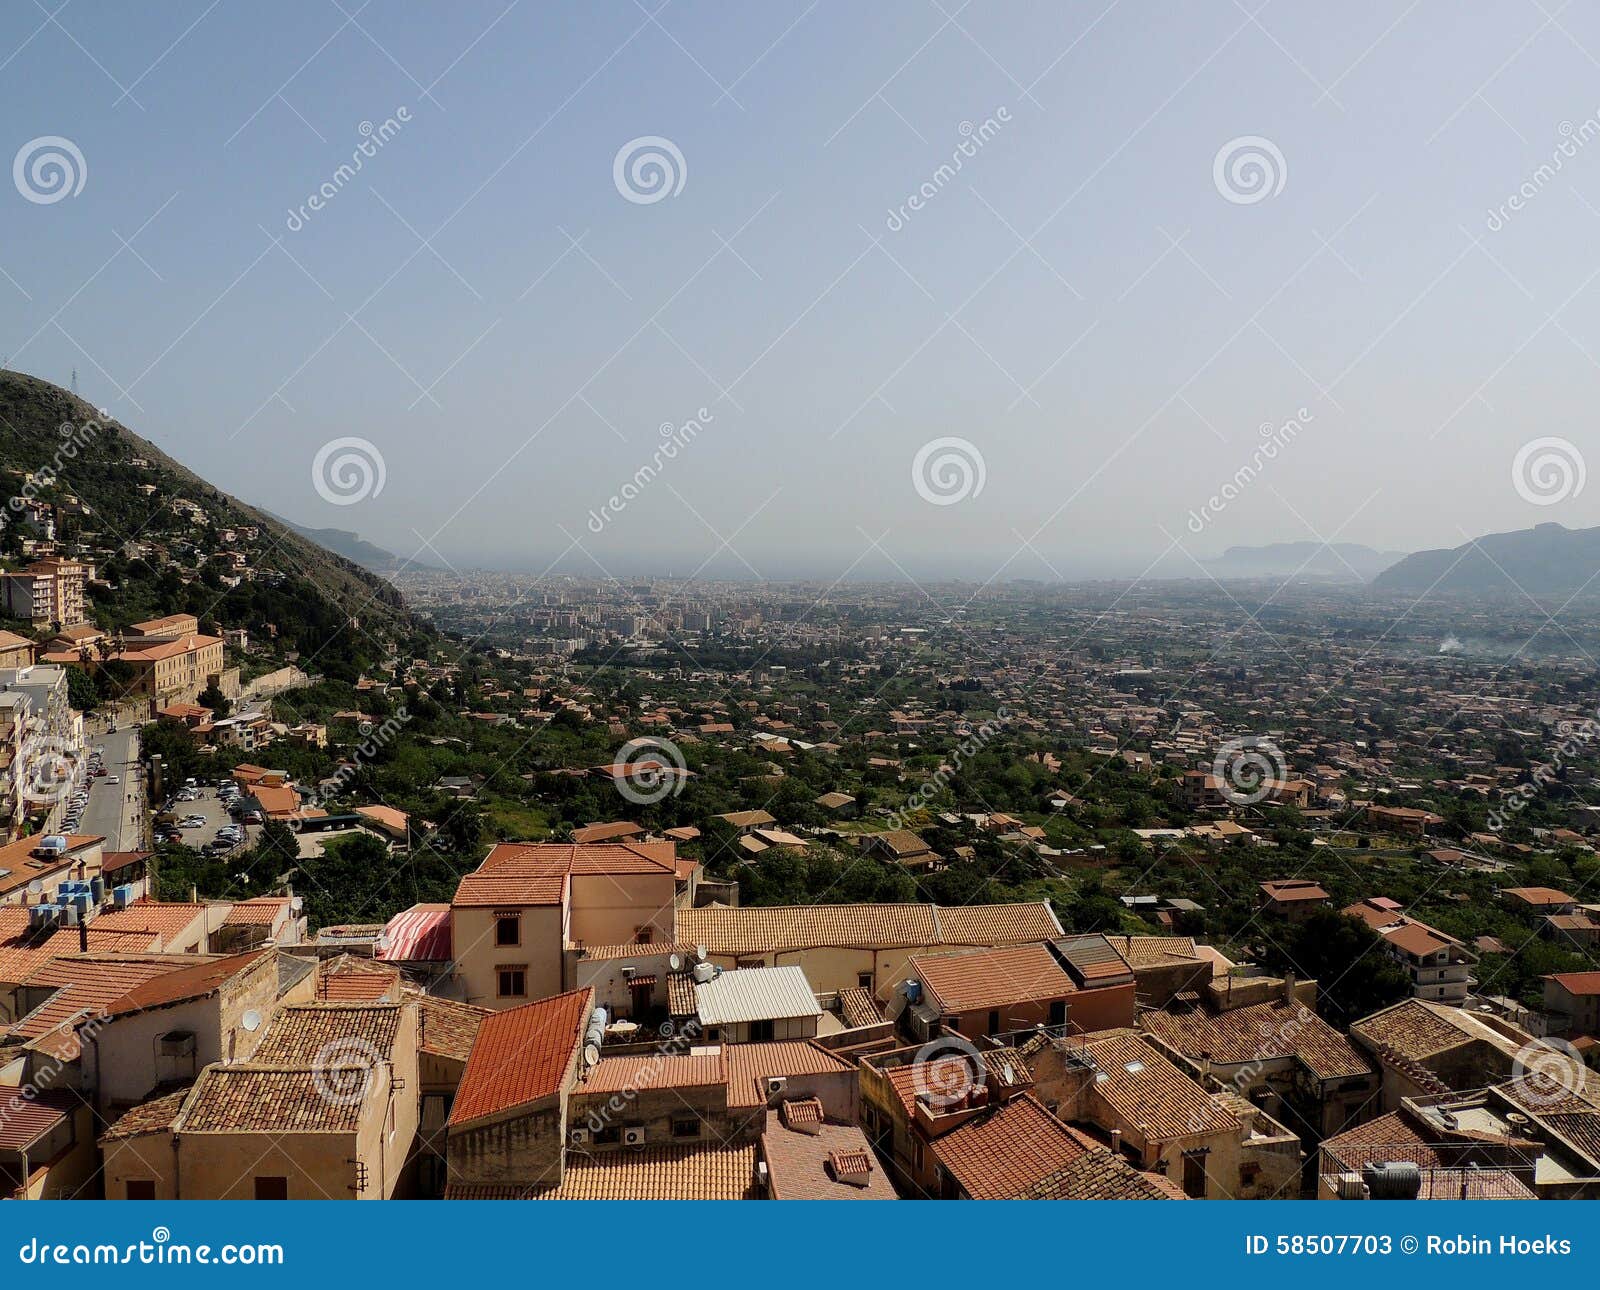 Monreale 2 stock image. Image of direction, mediterranean - 58507703